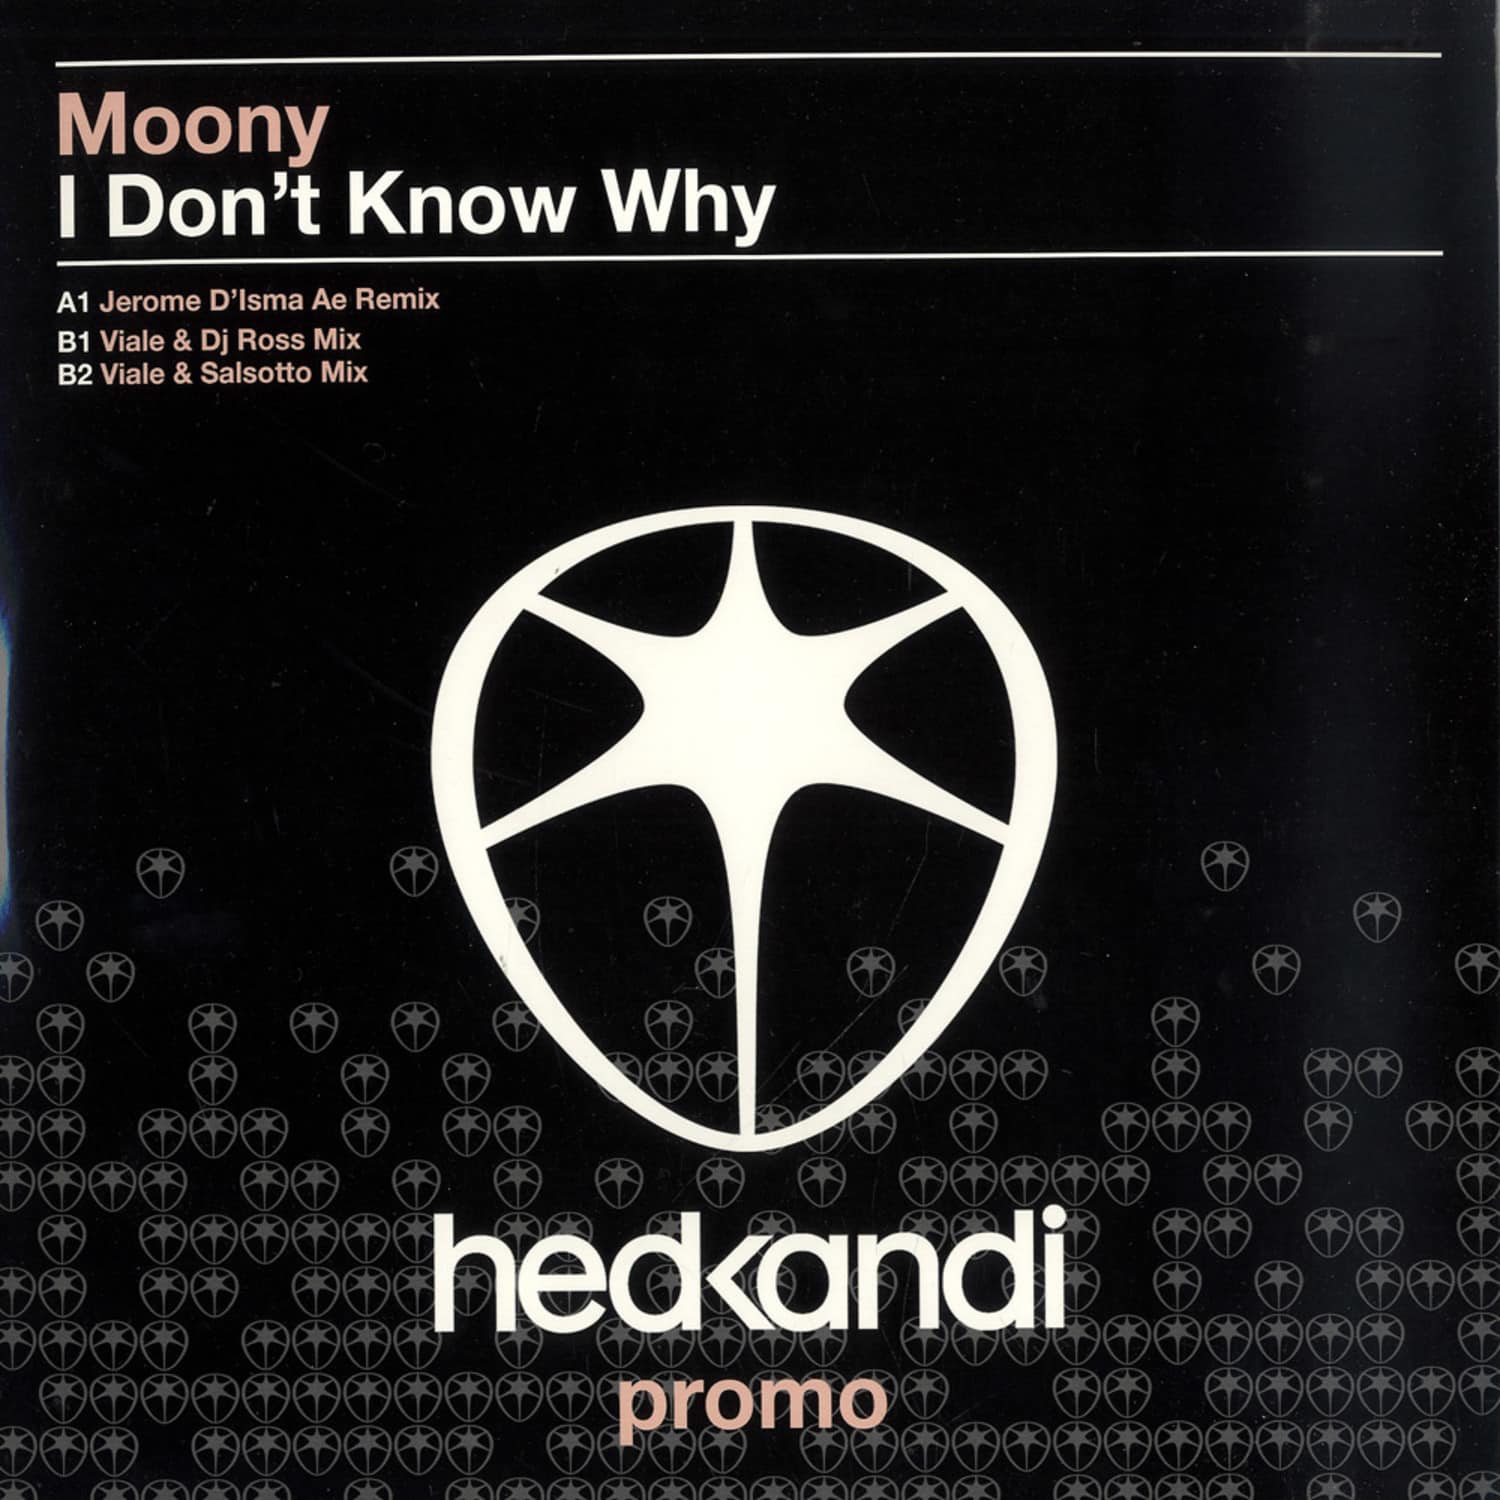 Moony - I DONT KNOW WHY